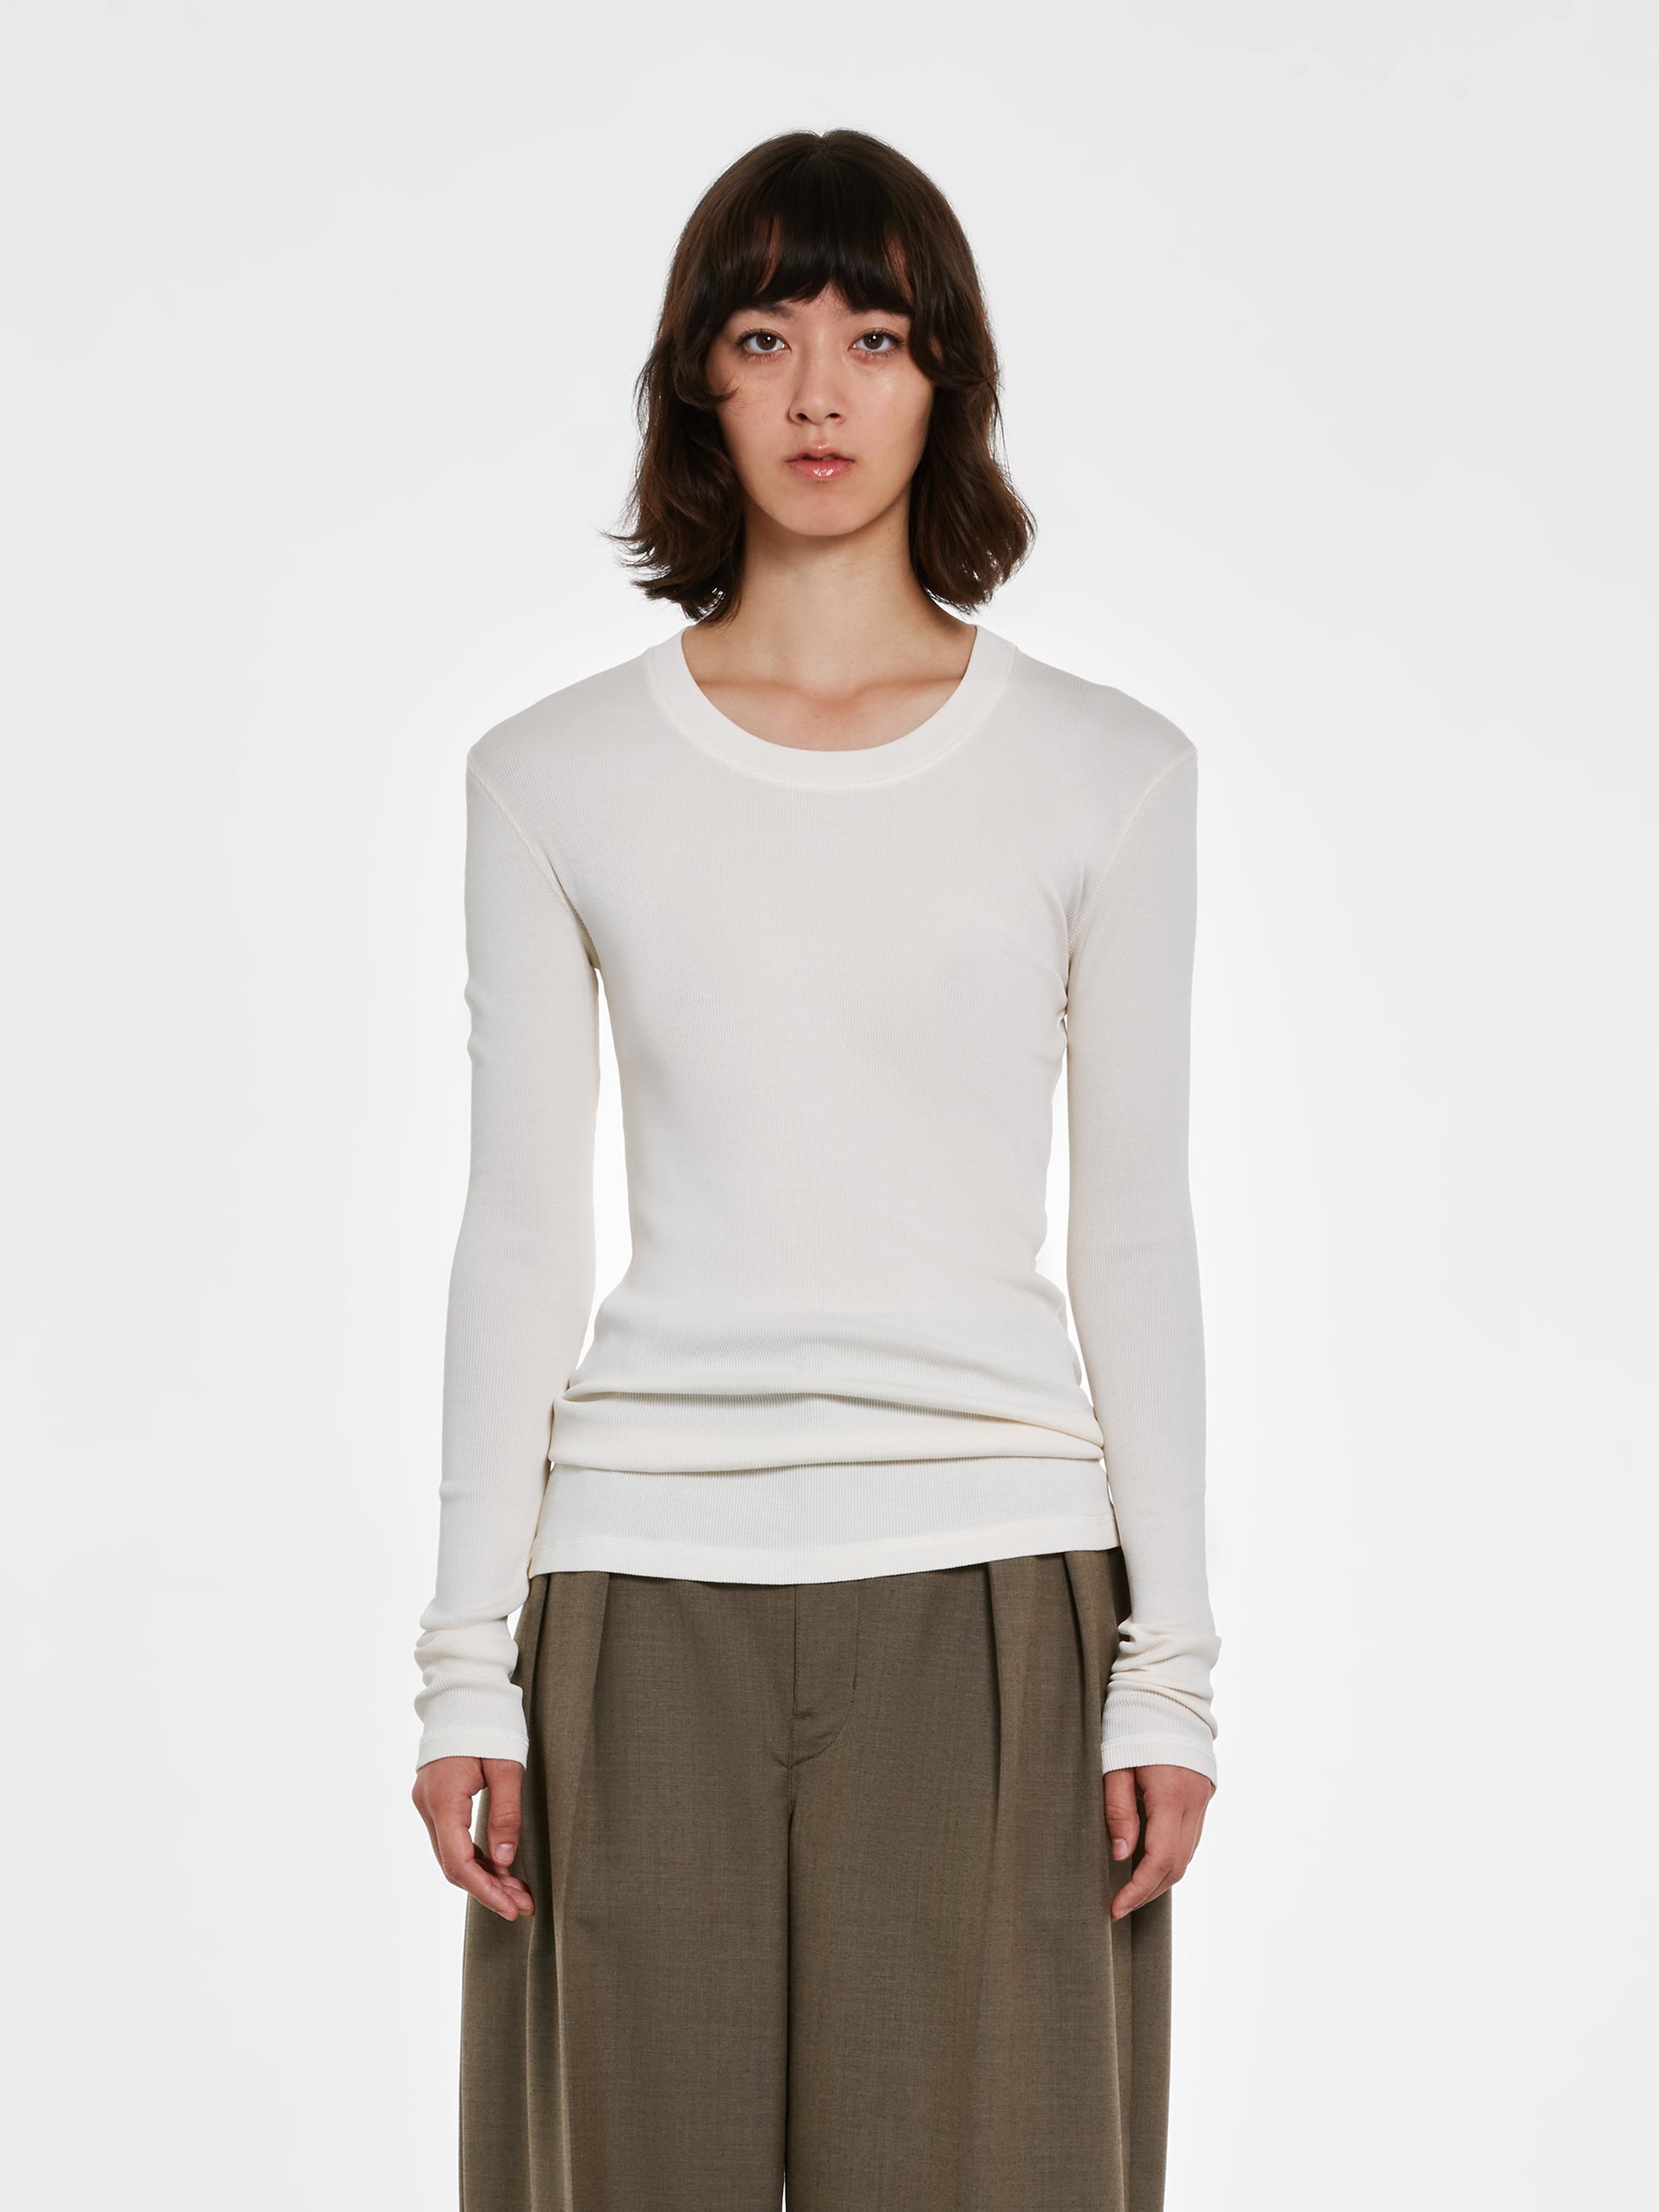 Lemaire - Women’s Rib Long Sleeve T-Shirt - (White) view 1